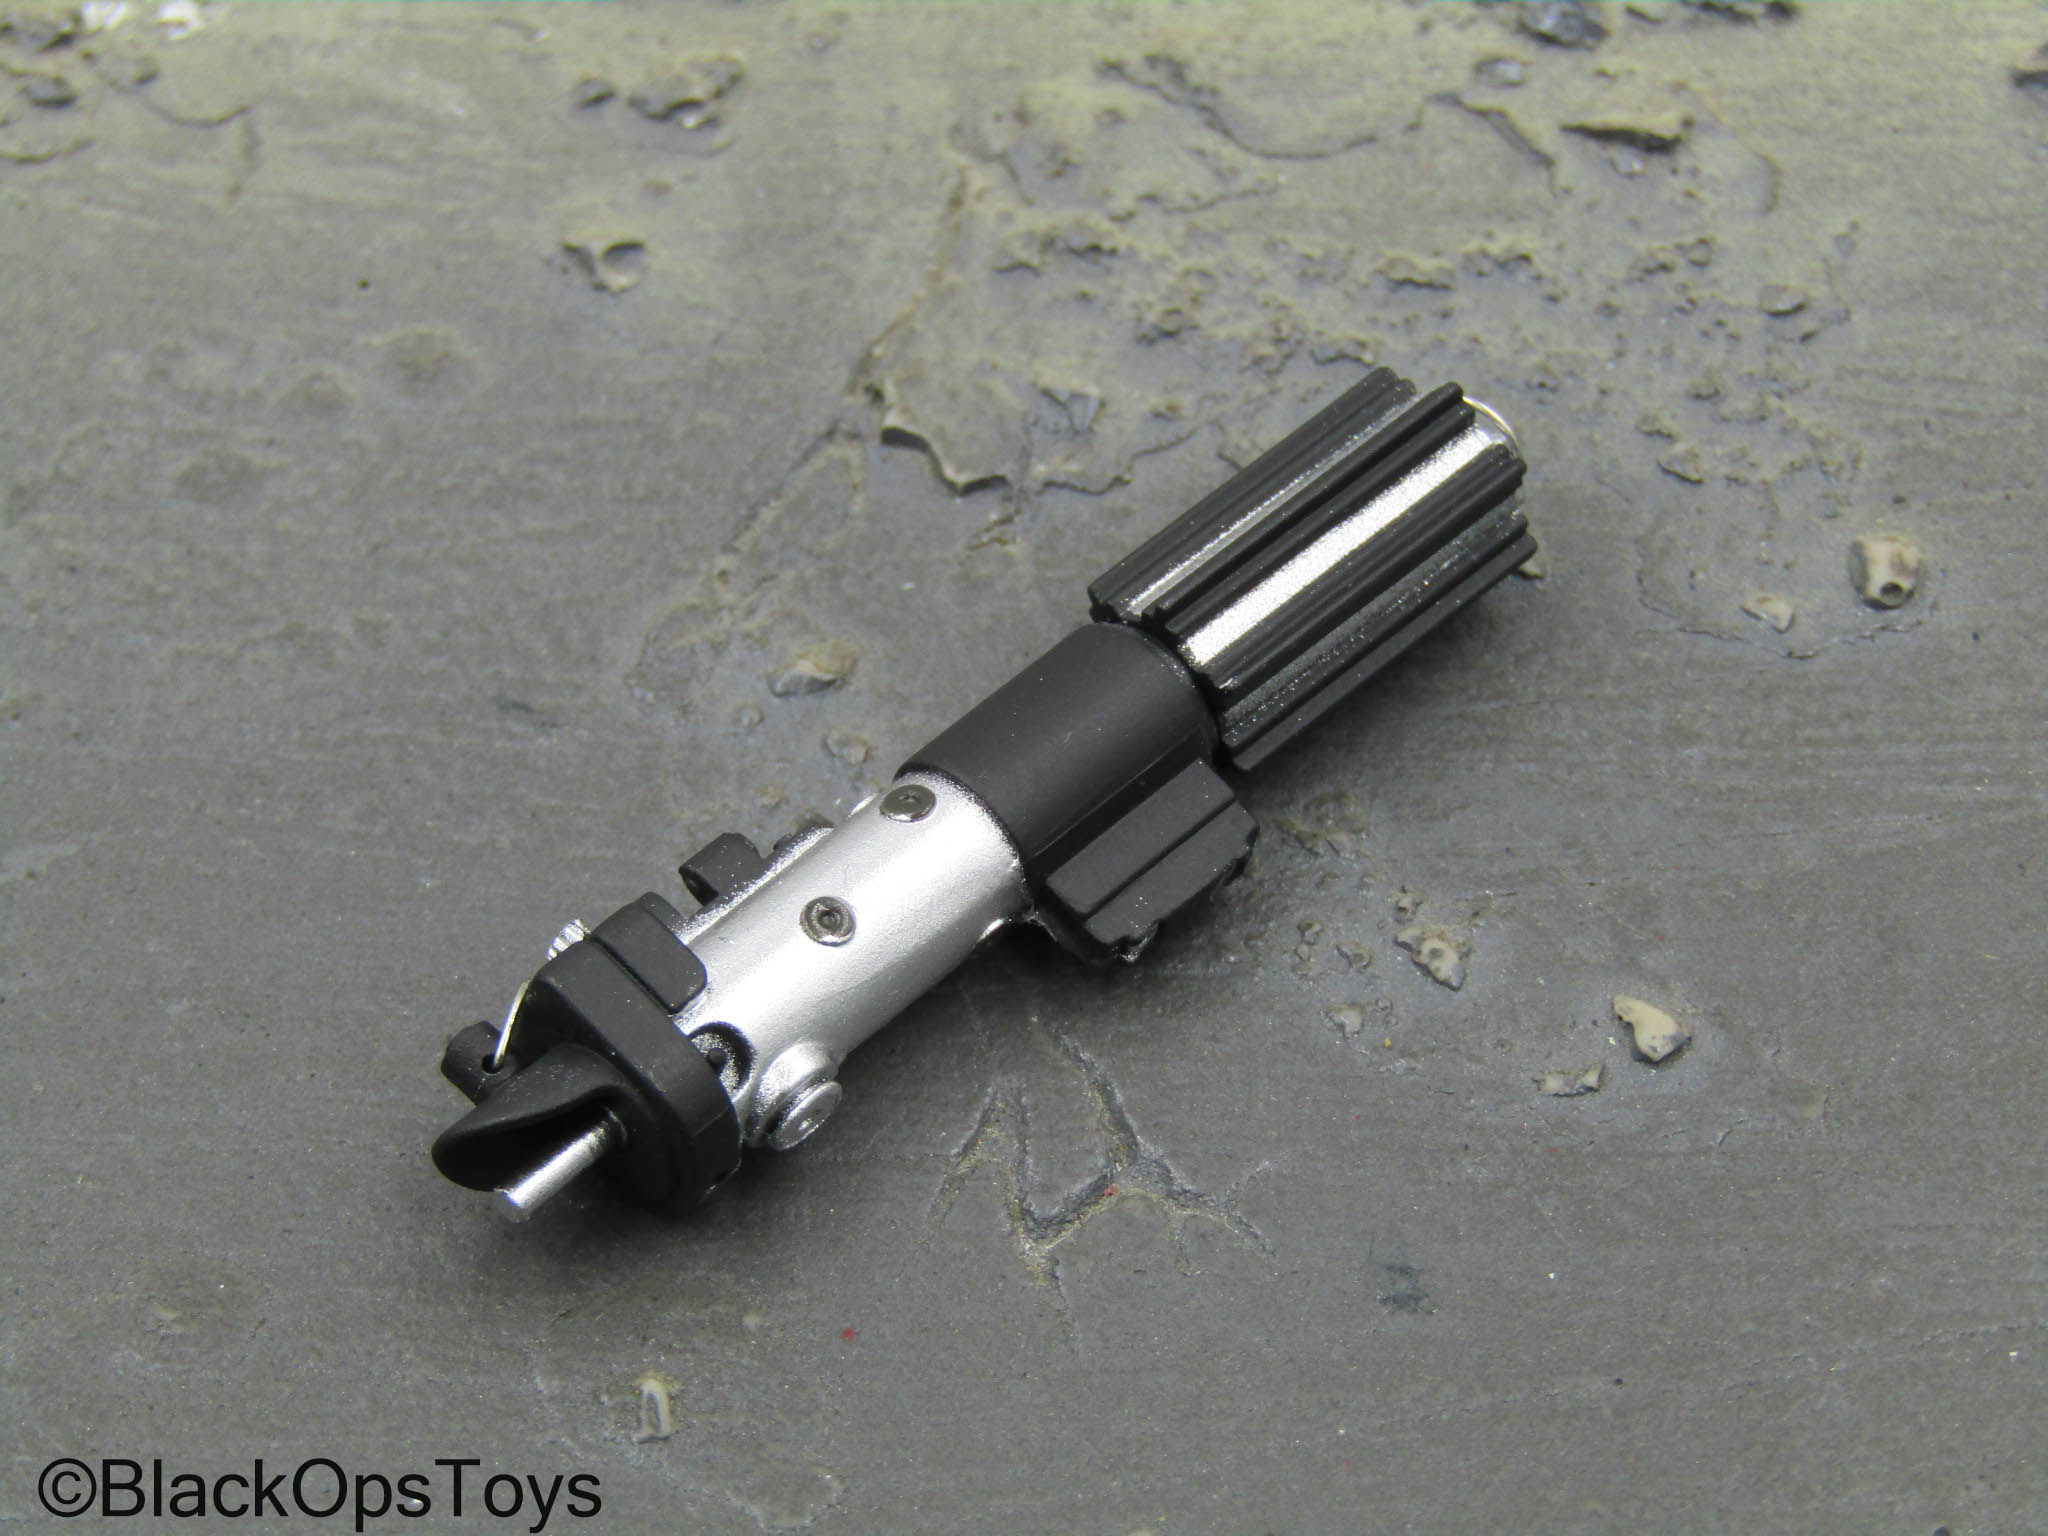 Star Wars Underground Toys Darth Vader Lightsaber Handle Cutlery 3pc Set N  Stock for sale online